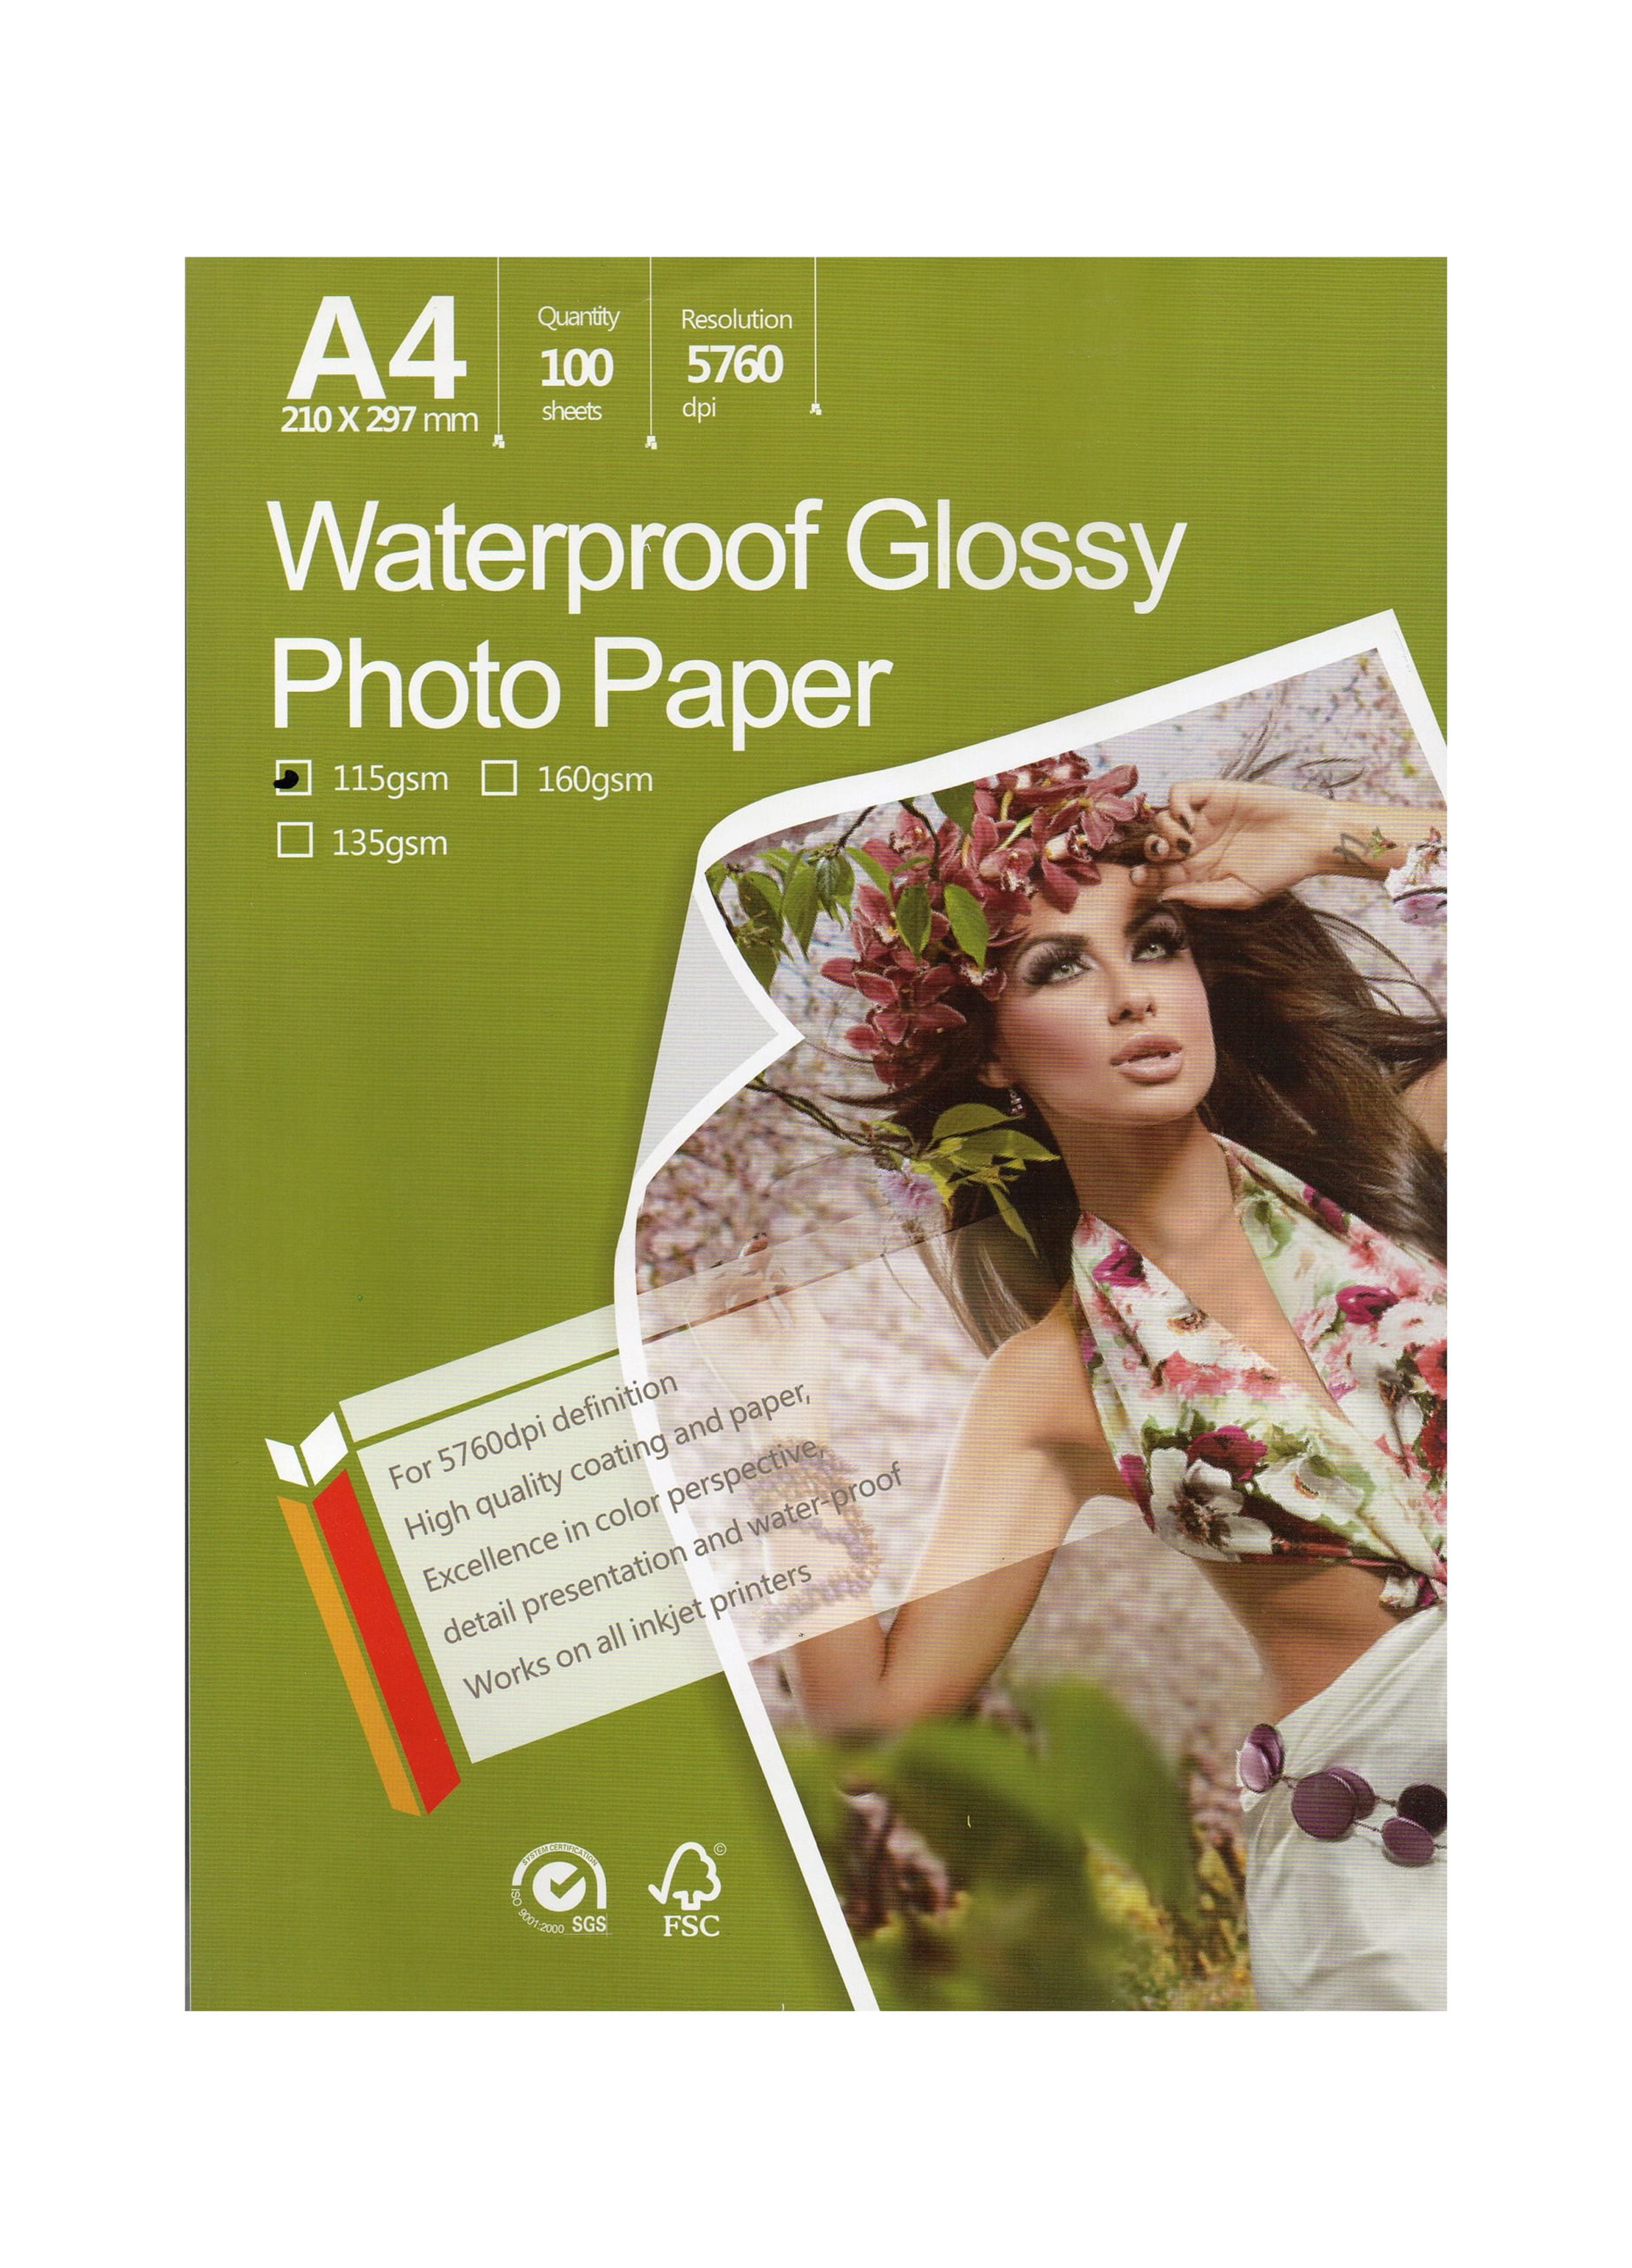 A4 Glossy Photo Paper 120g, Printer Sheets 160g A4